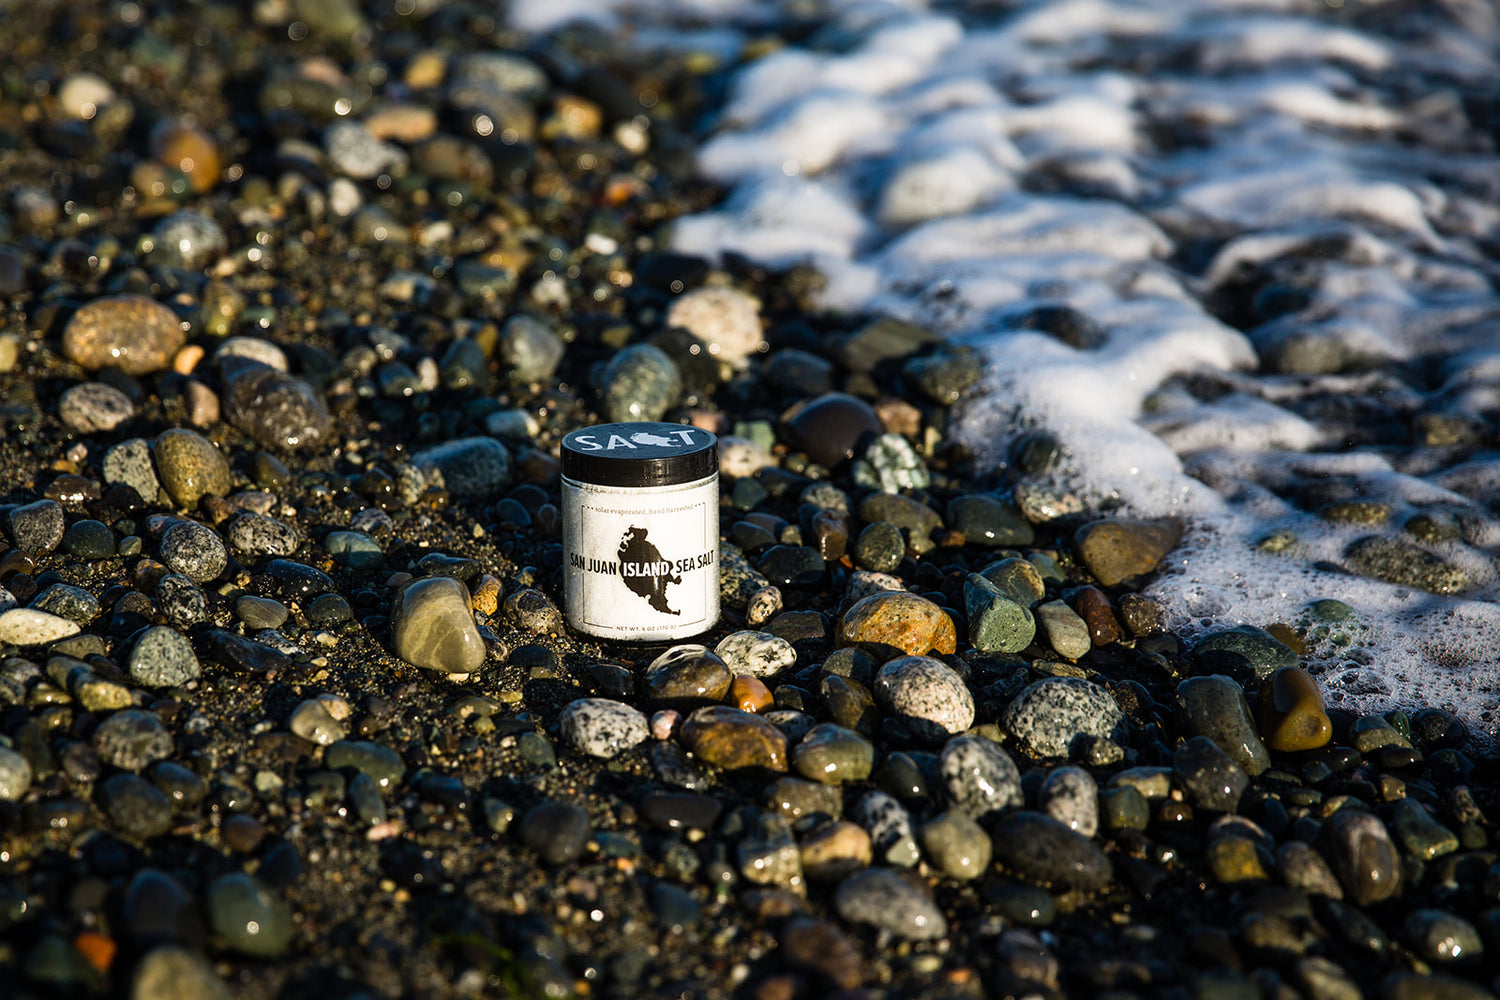 San Juan Island Sea Salt jar on the beach